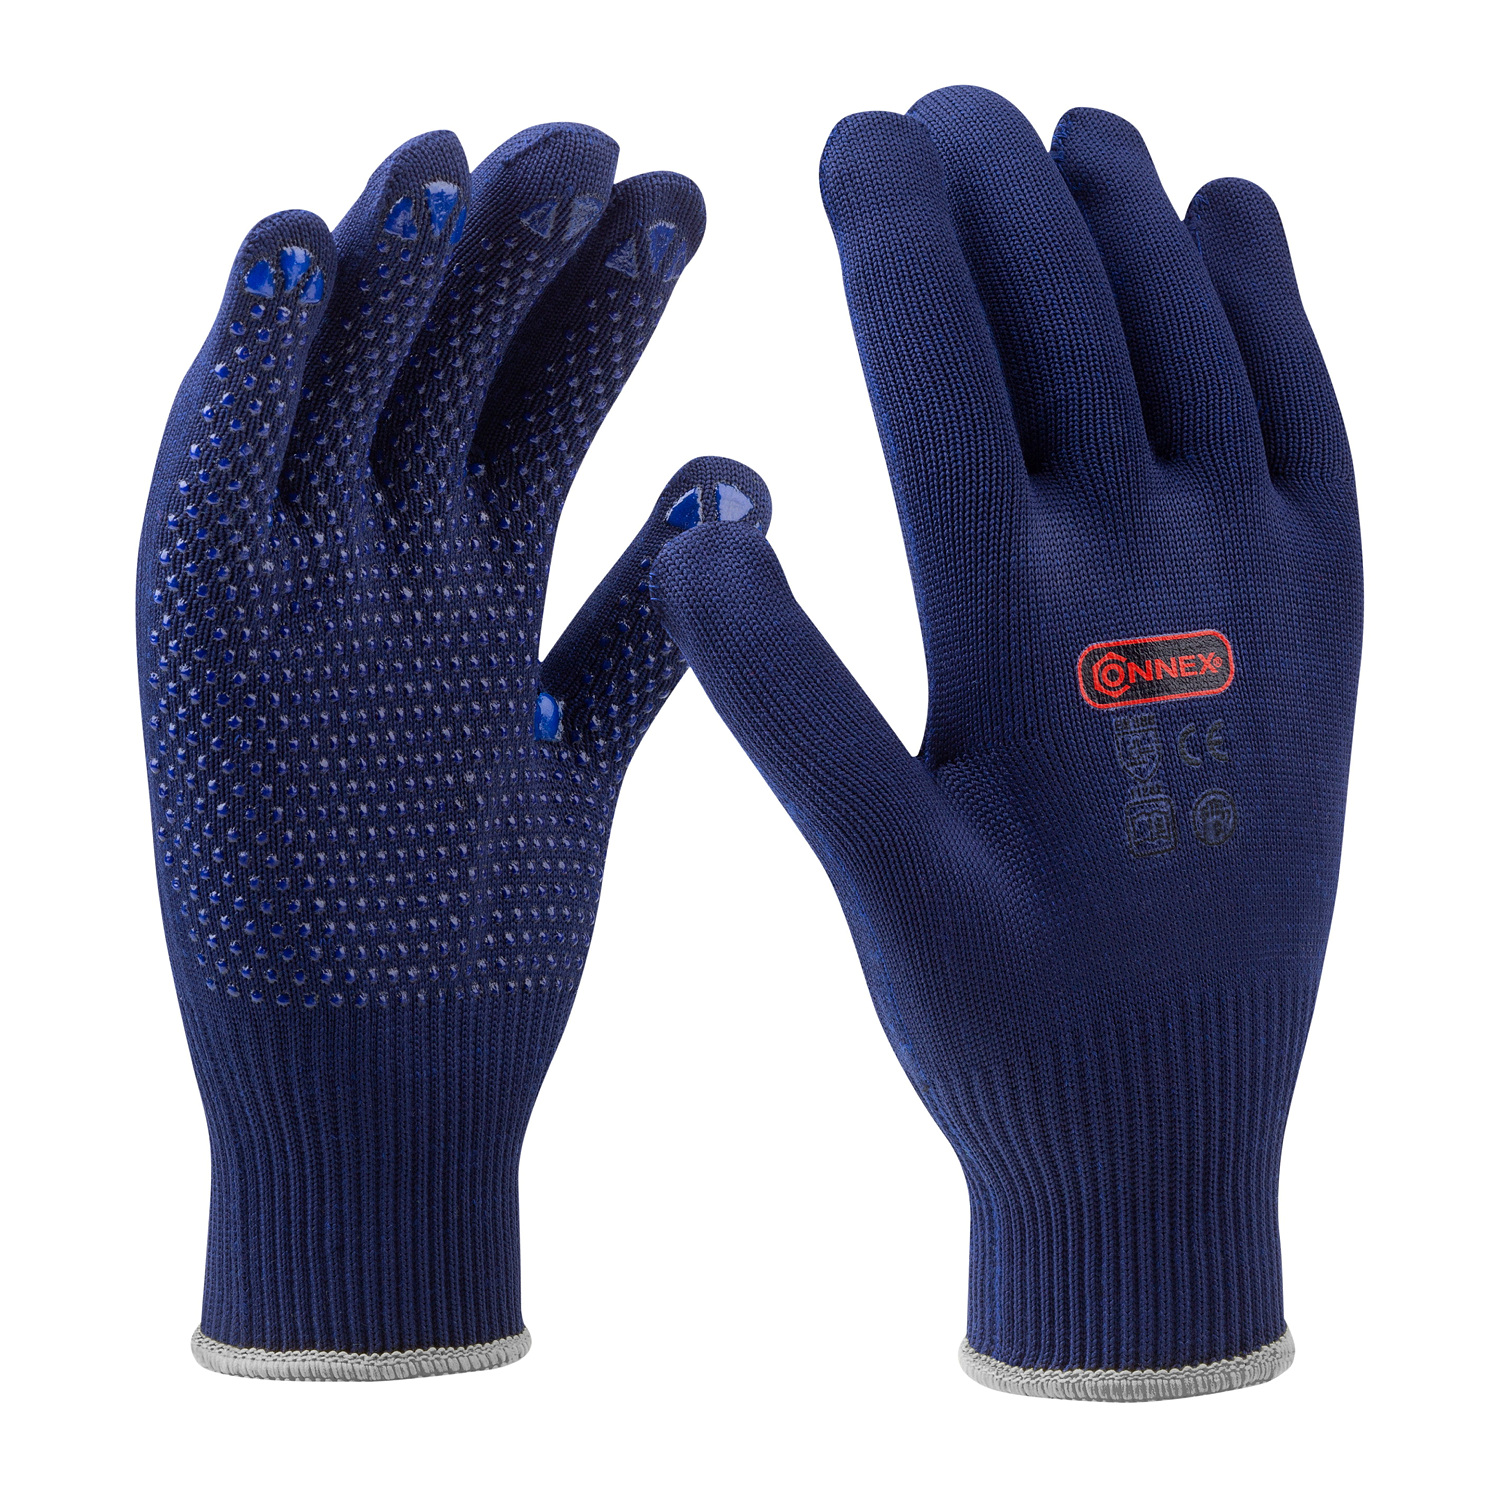 Connex Handschuhe Umzug plus, 1 Paar, Größe 9